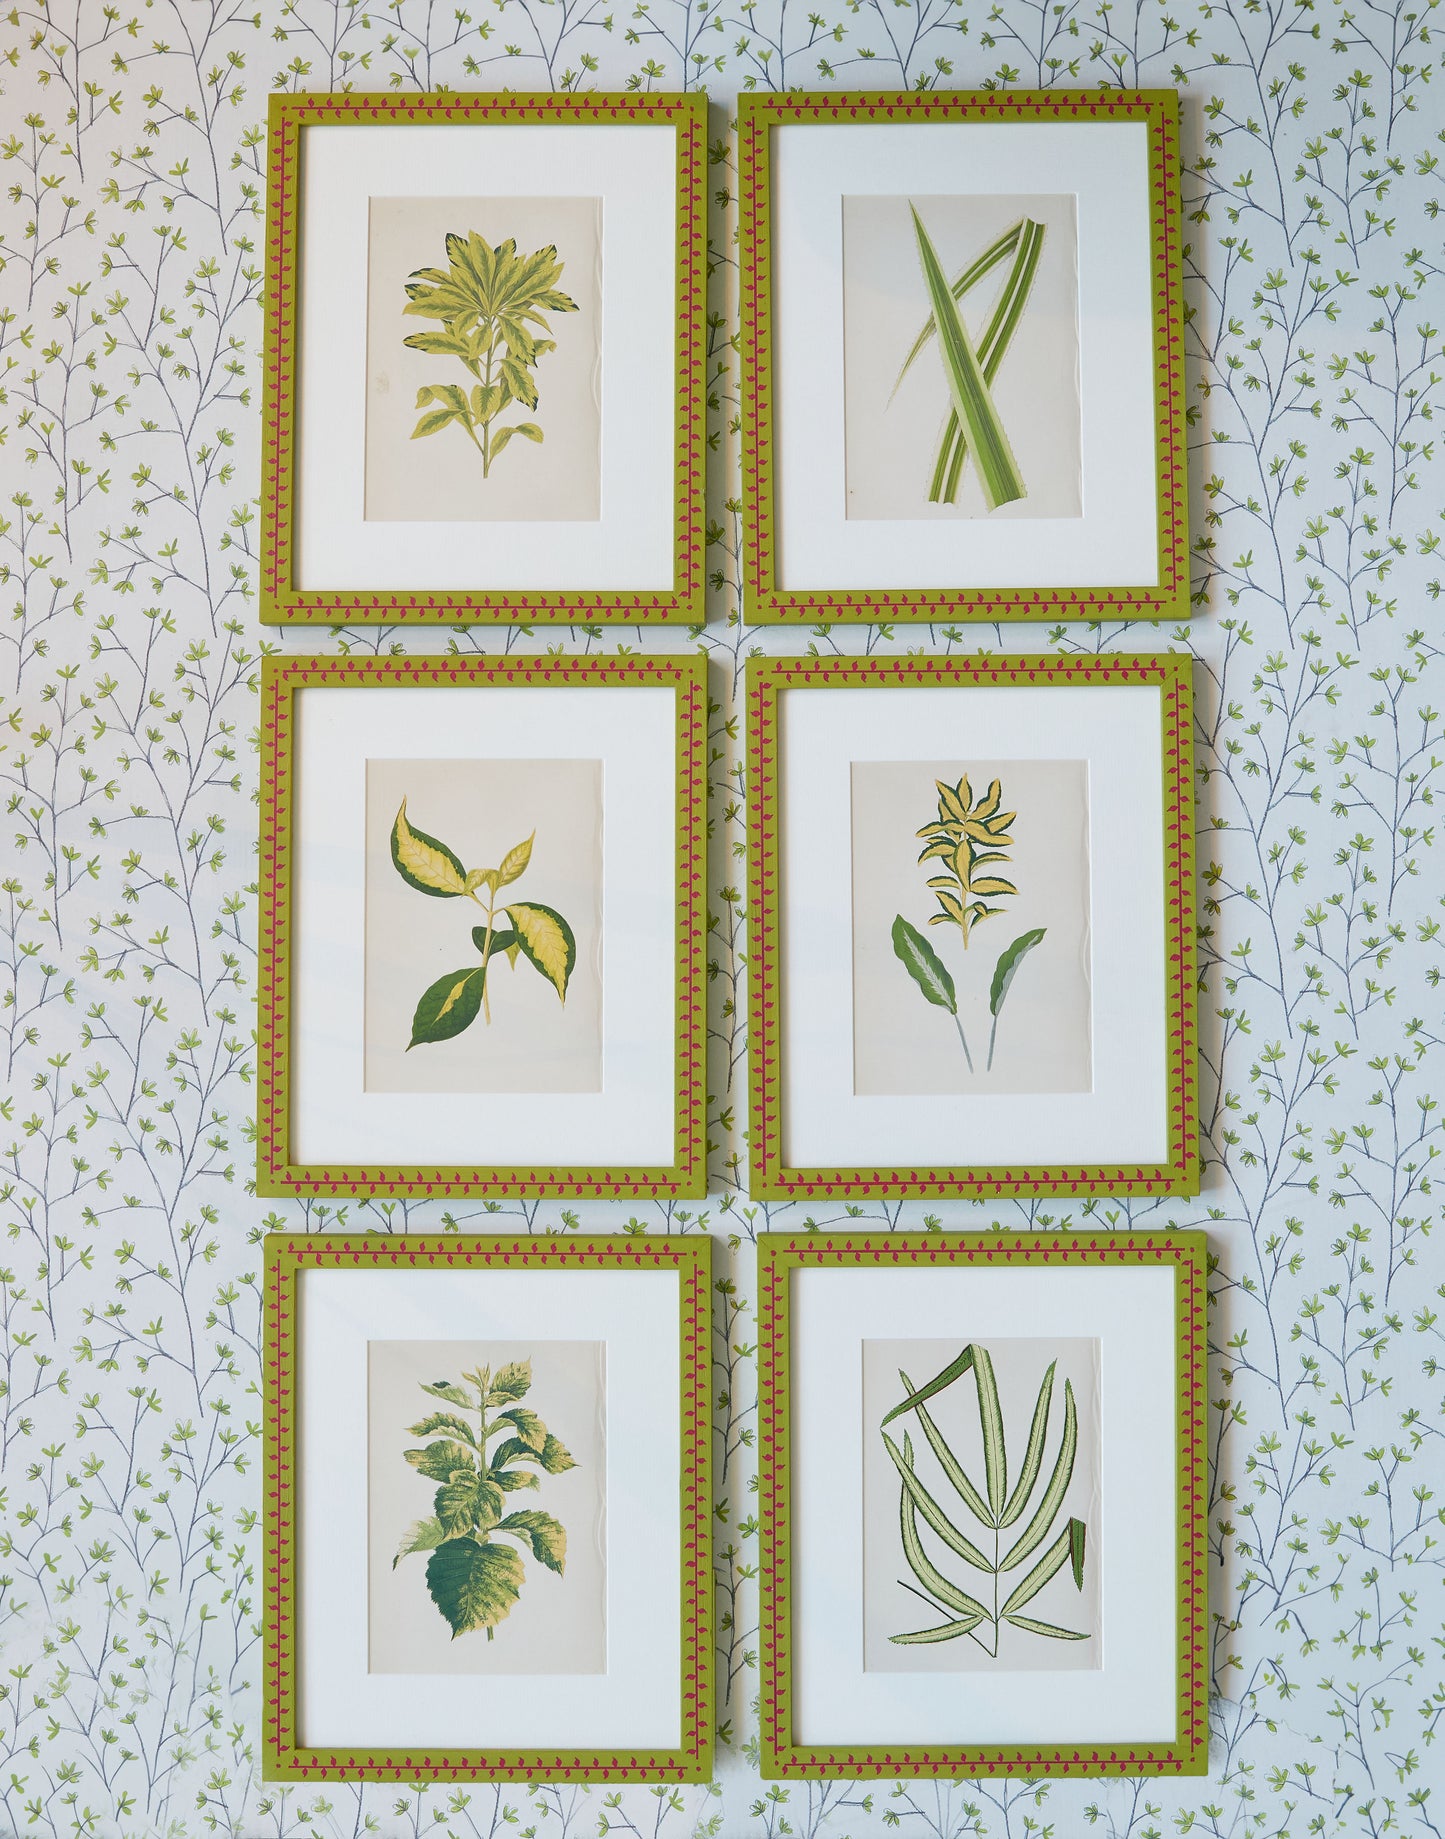 Set of Six Framed Botanical Prints circa 1860 from "Beautiful Leaved Plants" by Edward Joseph Lowe (1825-1900)